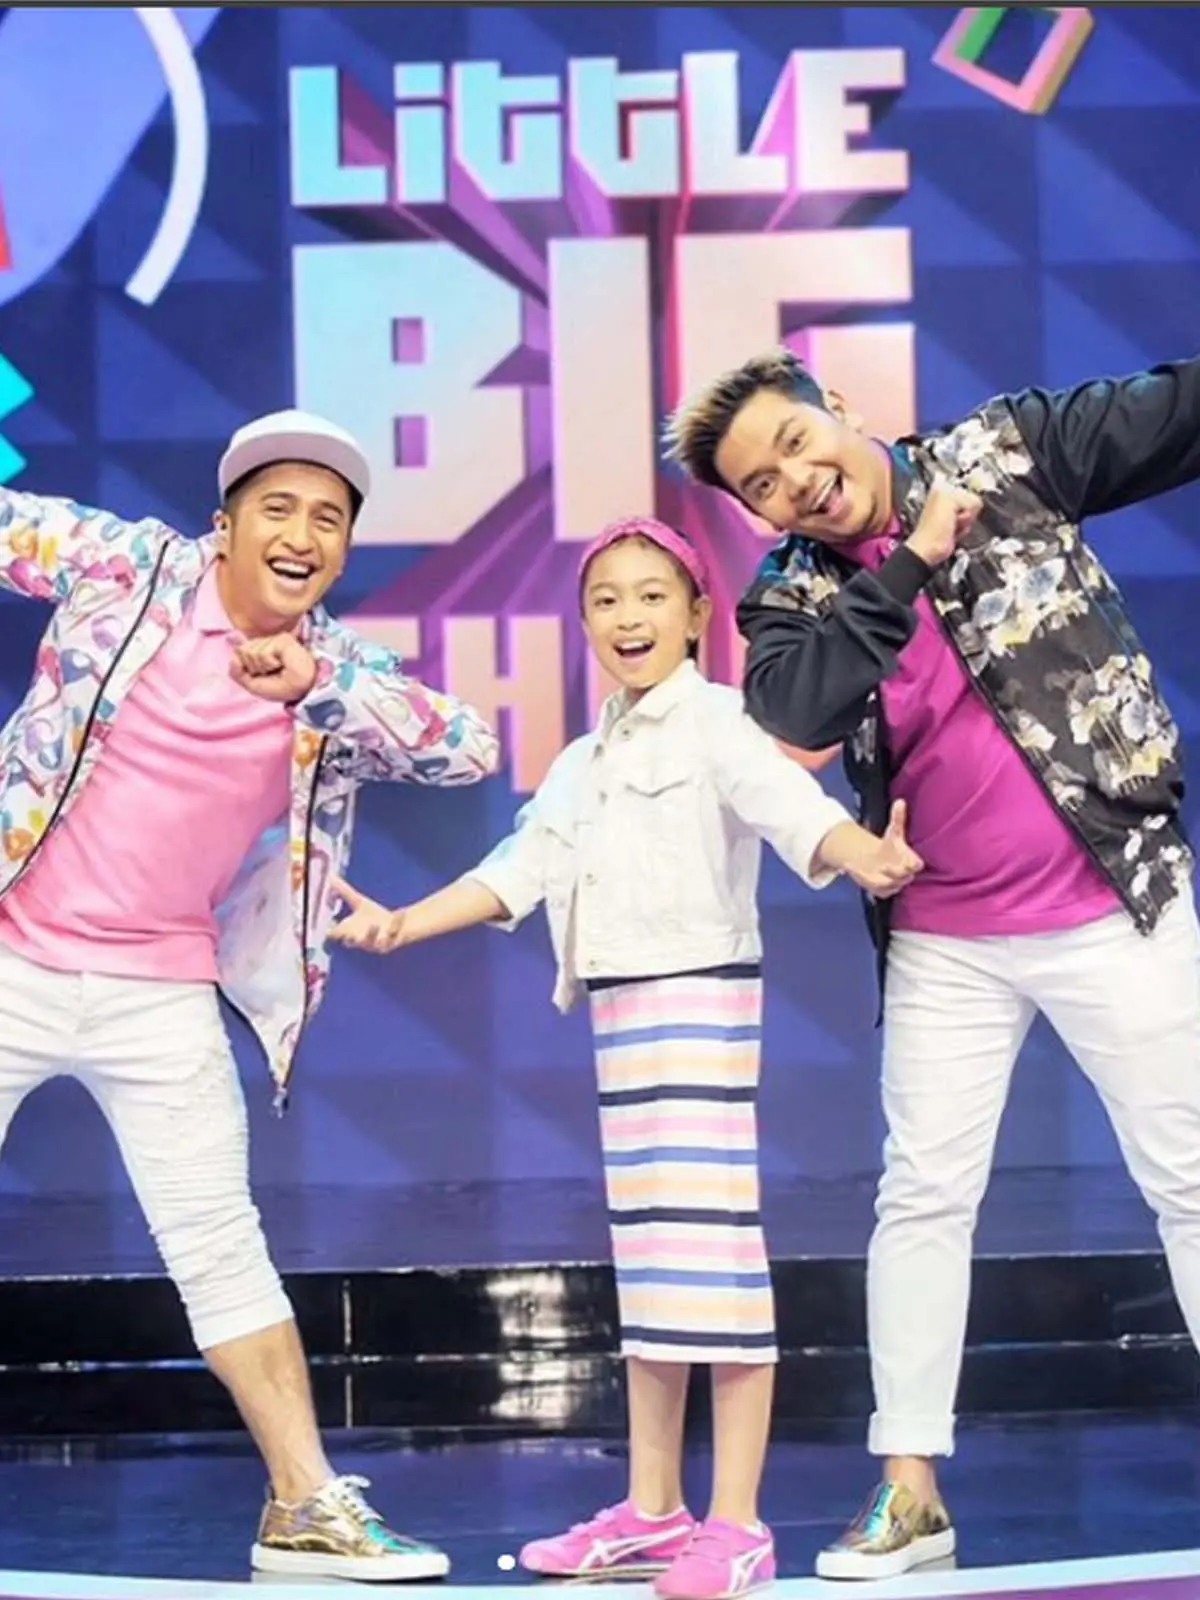 Irfan Hakim dan Indra Bekti menjadi pemandu acara Little Big Show. (Instagram)